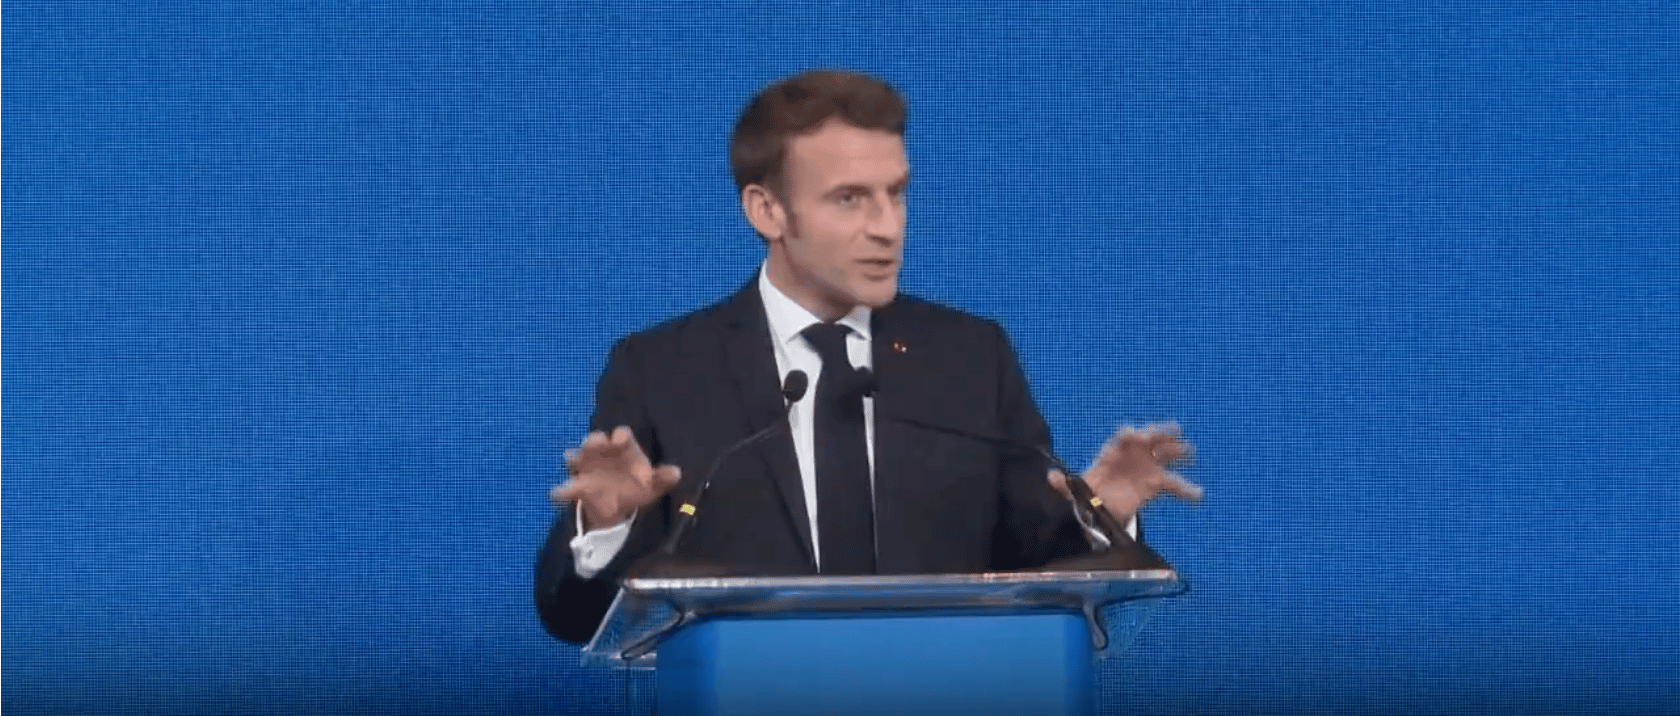 (WATCH) President Emmanuel Macron says ‘We Need A Single Global Order’ Says Macron at APEC Summit